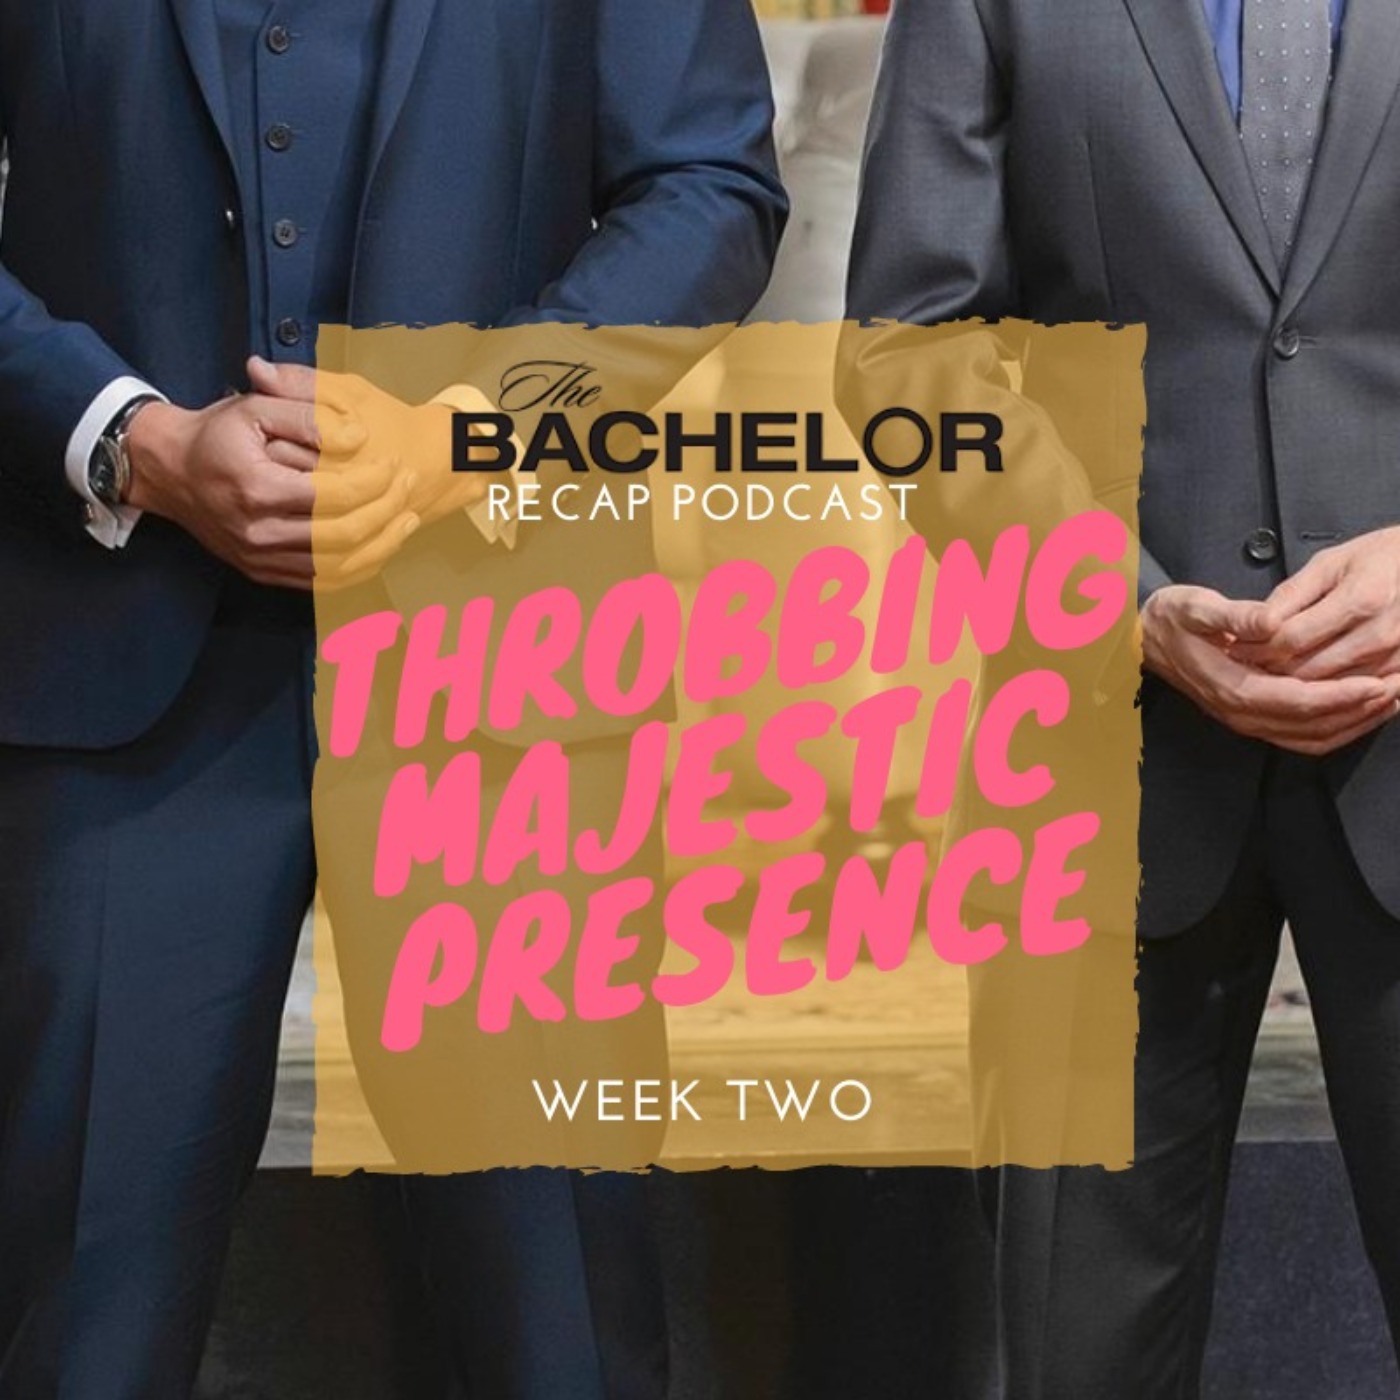 THE BACHELOR week two: Throbbing Majestic Presence